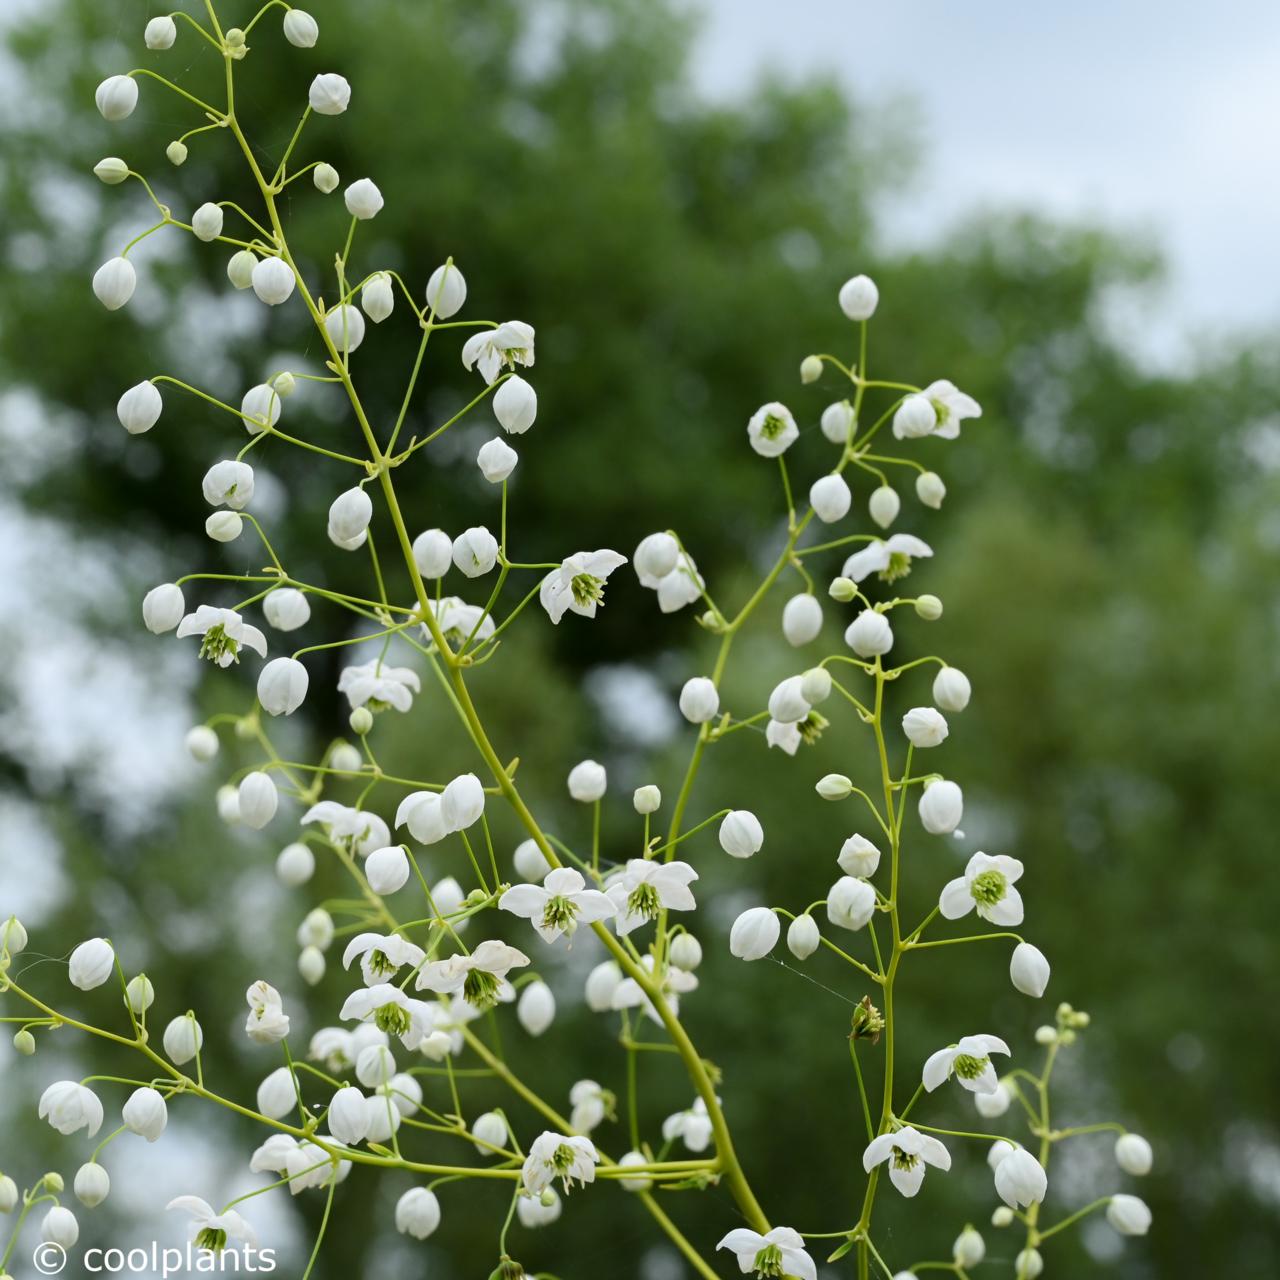 Thalictrum delavayi 'Splendide White' plant